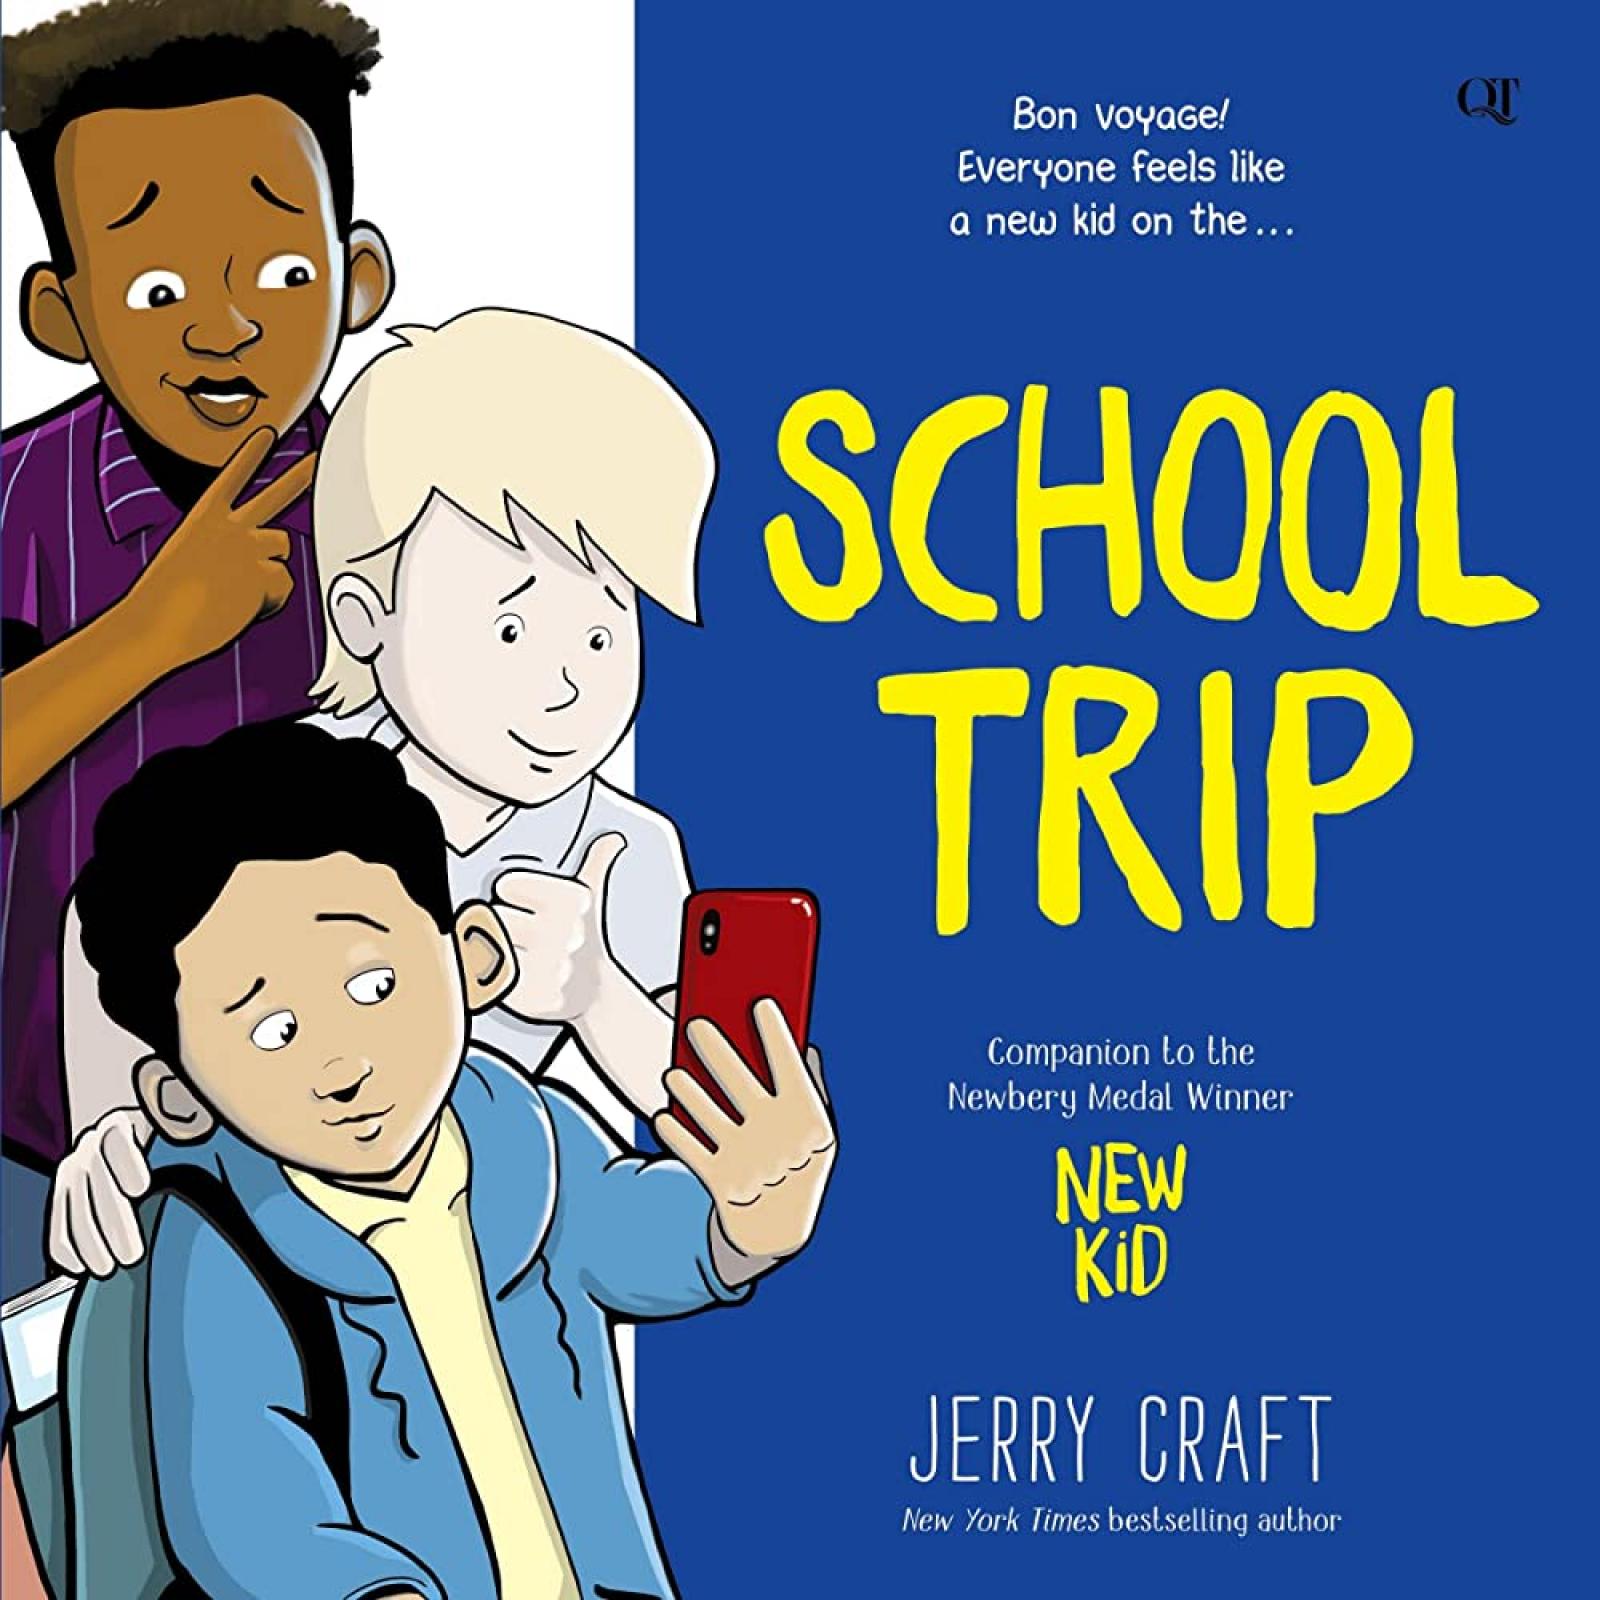 School Trip by Jerry Craft